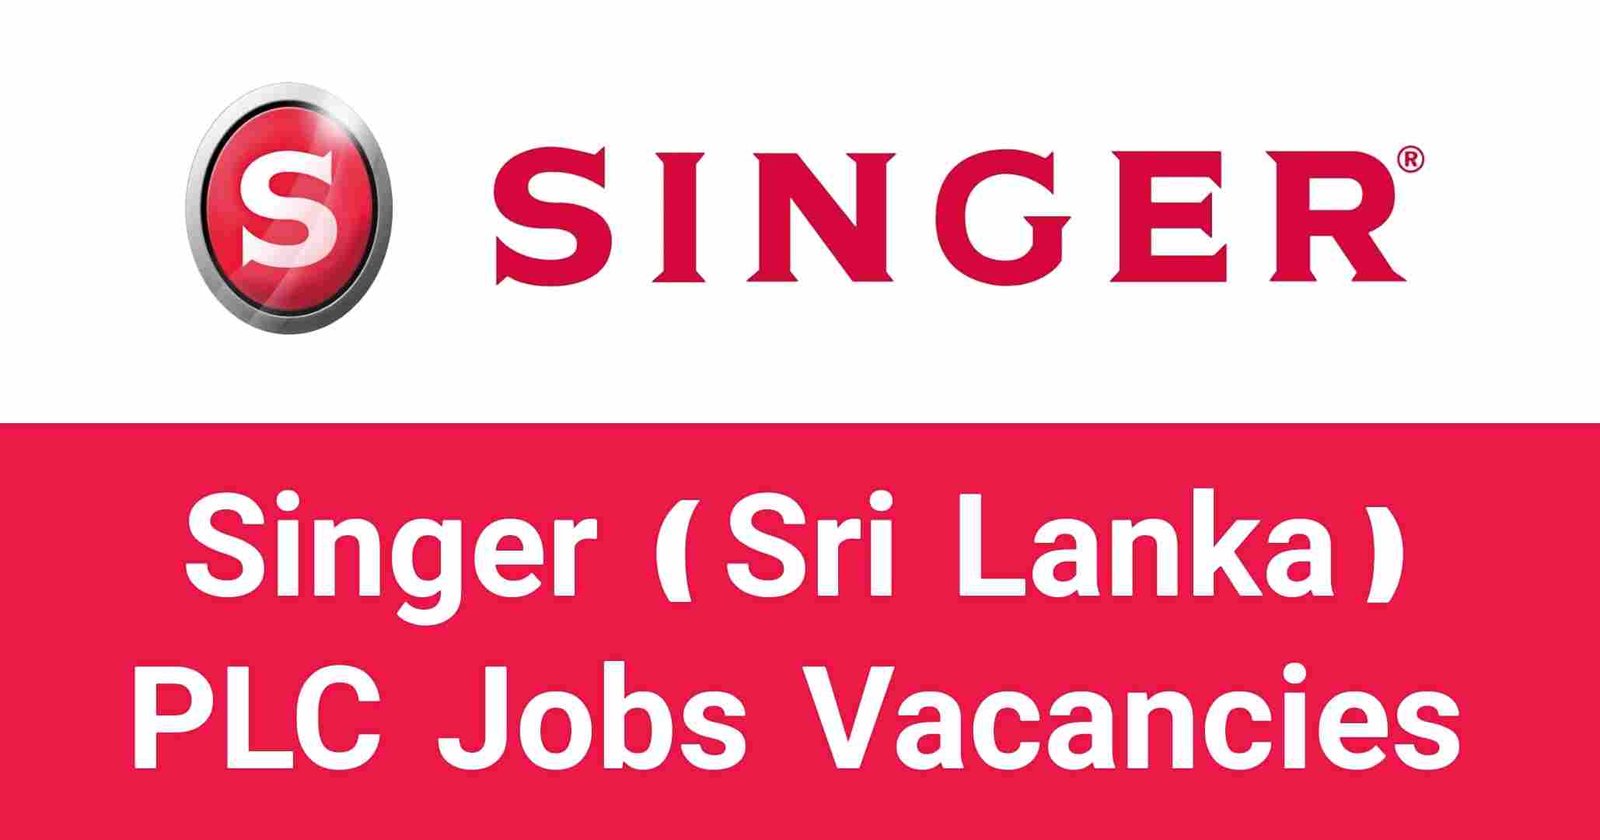 Singer (Sri Lanka) PLC Jobs Vacancies